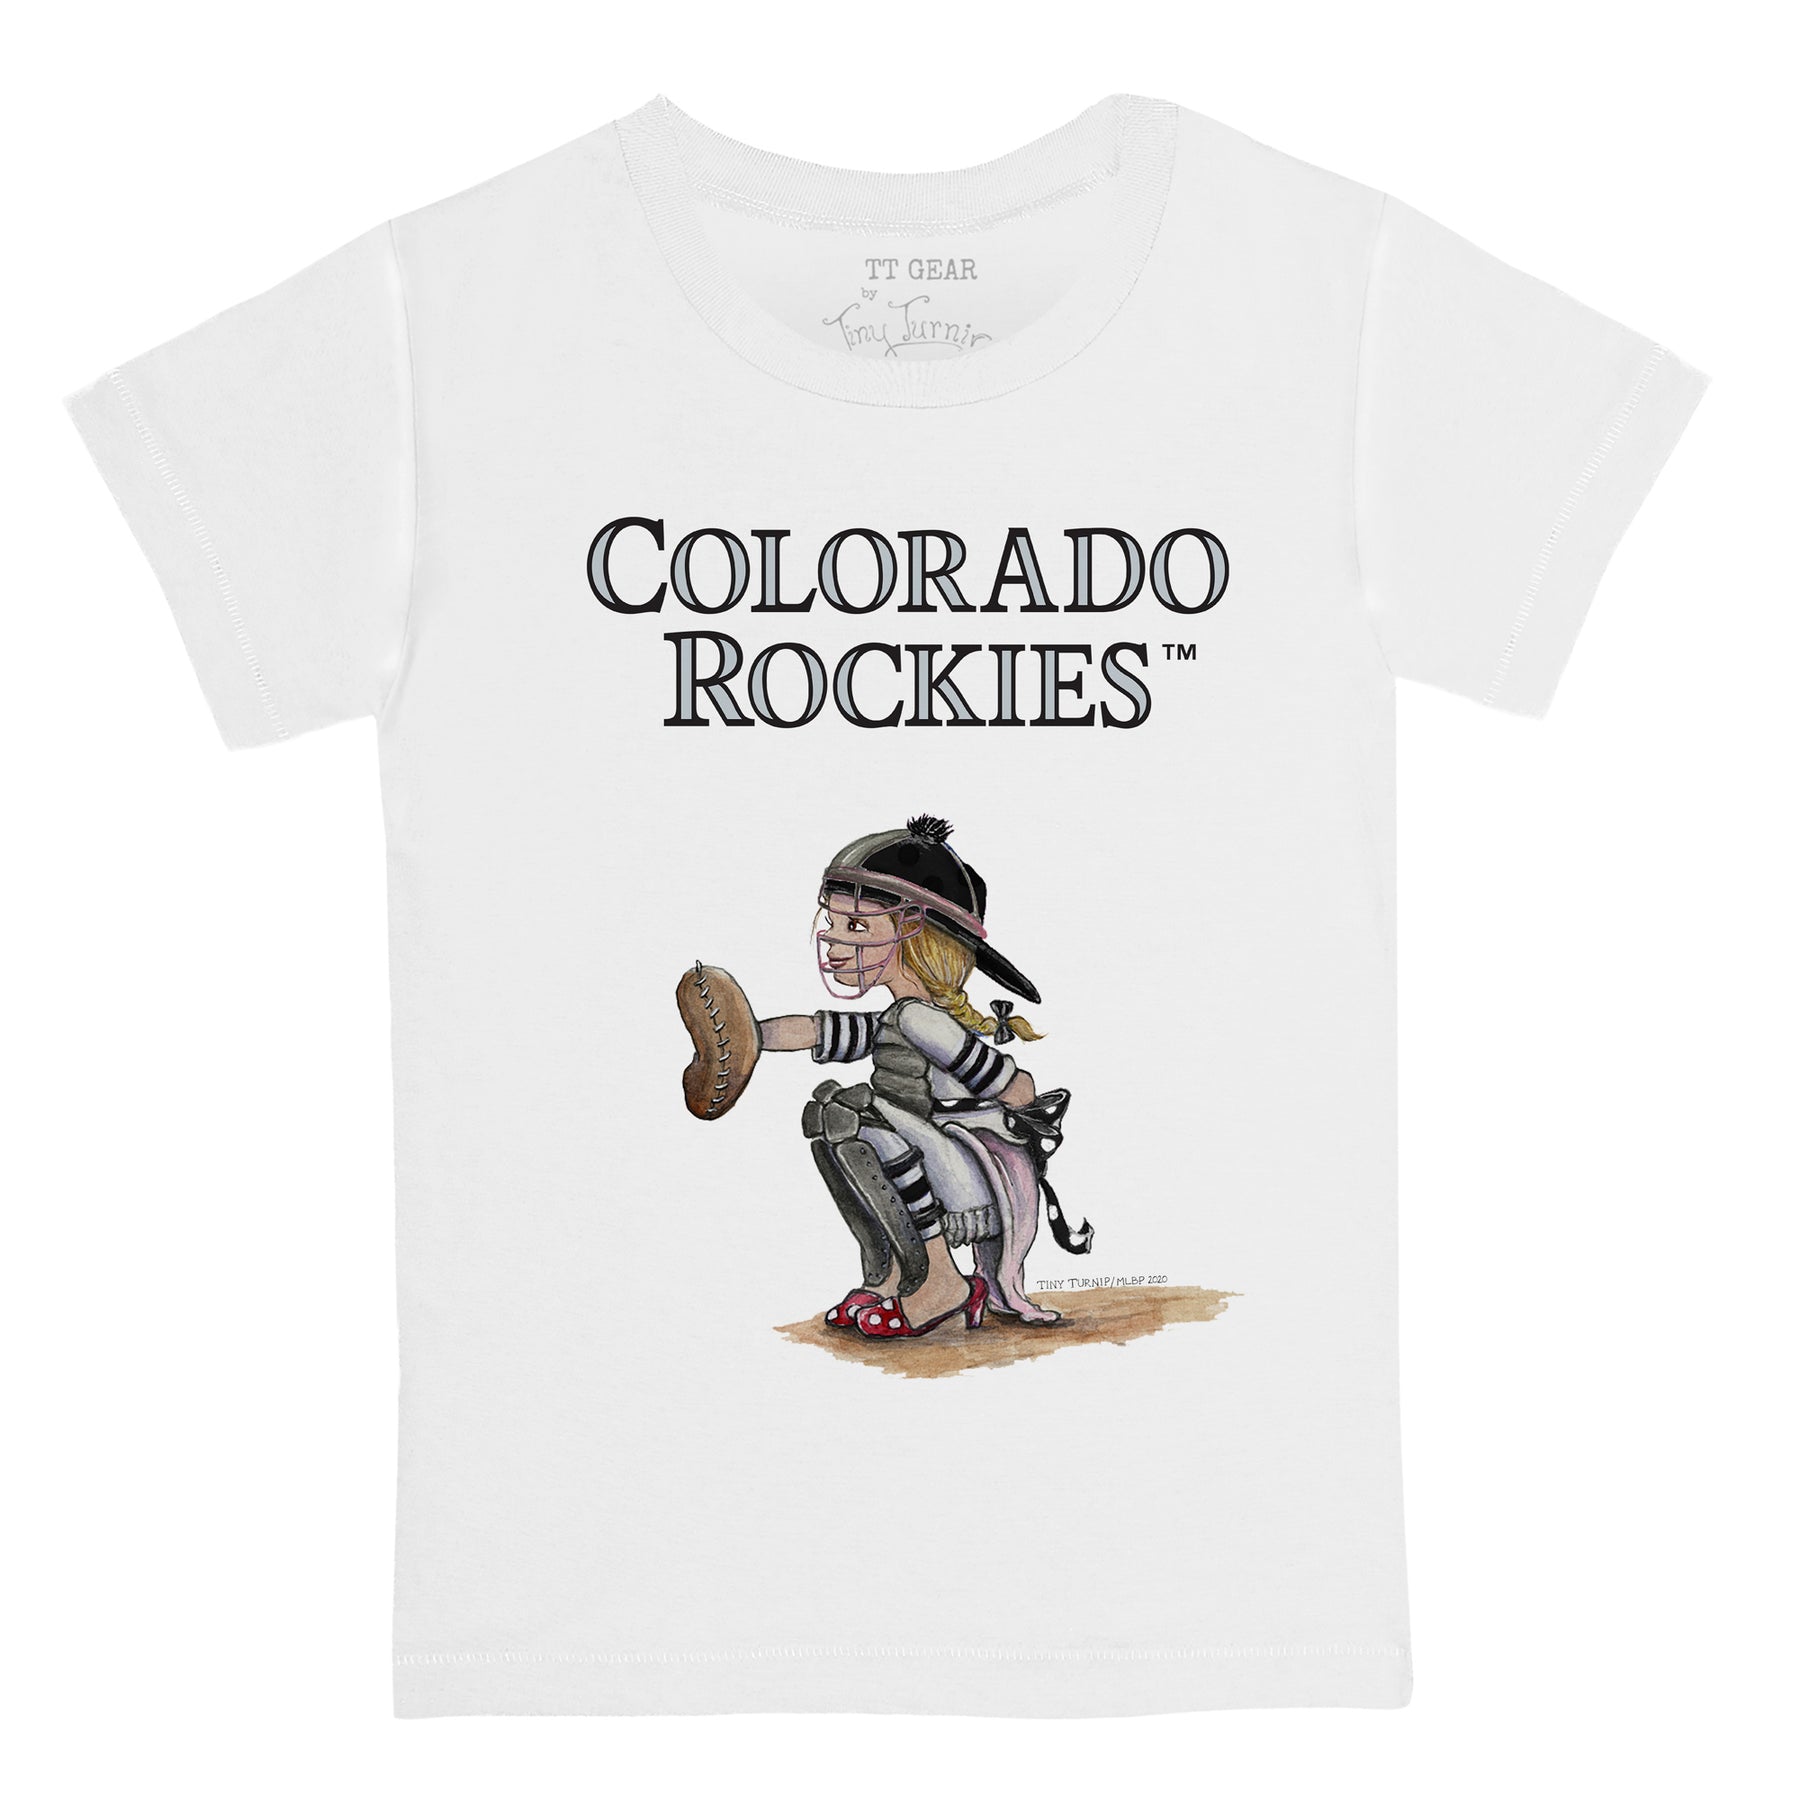 Colorado Rockies Kate the Catcher Tee Shirt